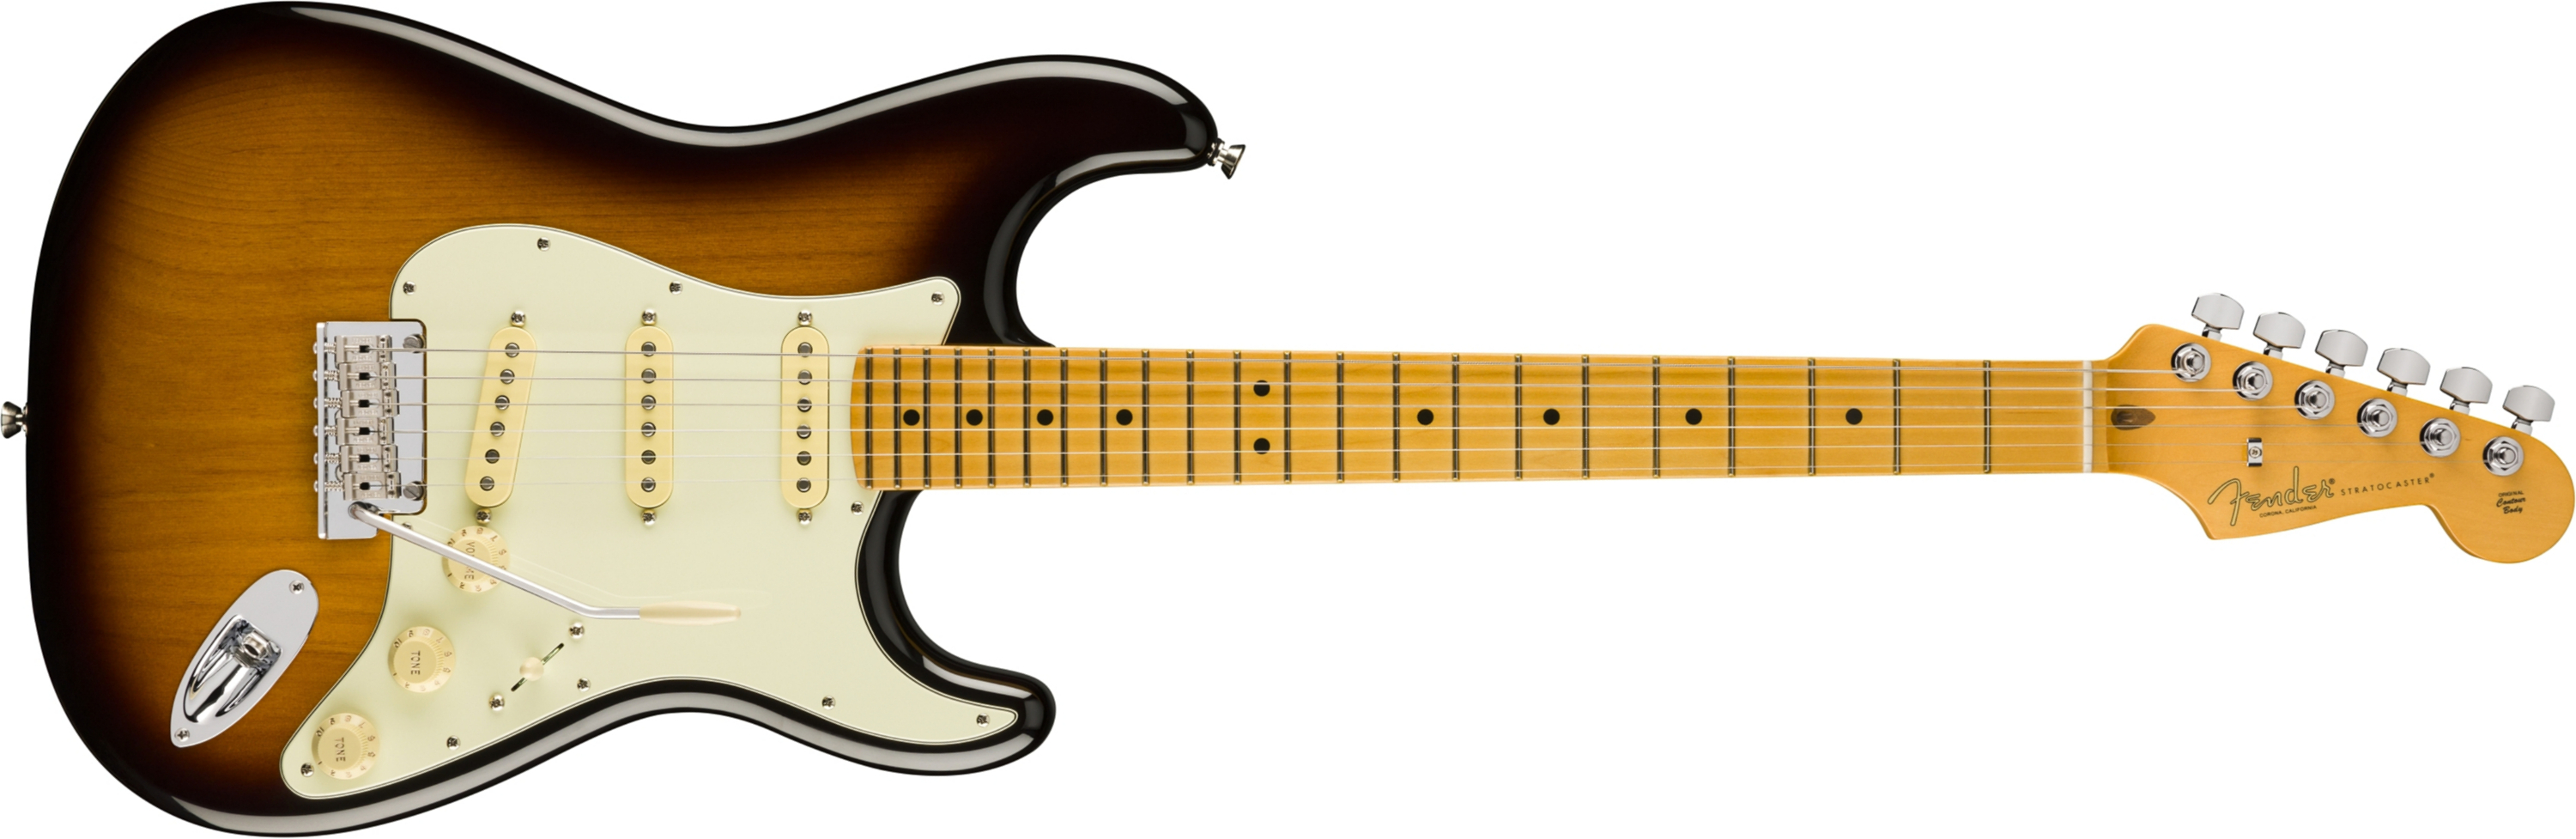 Fender Stratocaster American Pro Ii 70th Anniversary 3s Trem Mn - 2-color Sunburst - Str shape electric guitar - Main picture